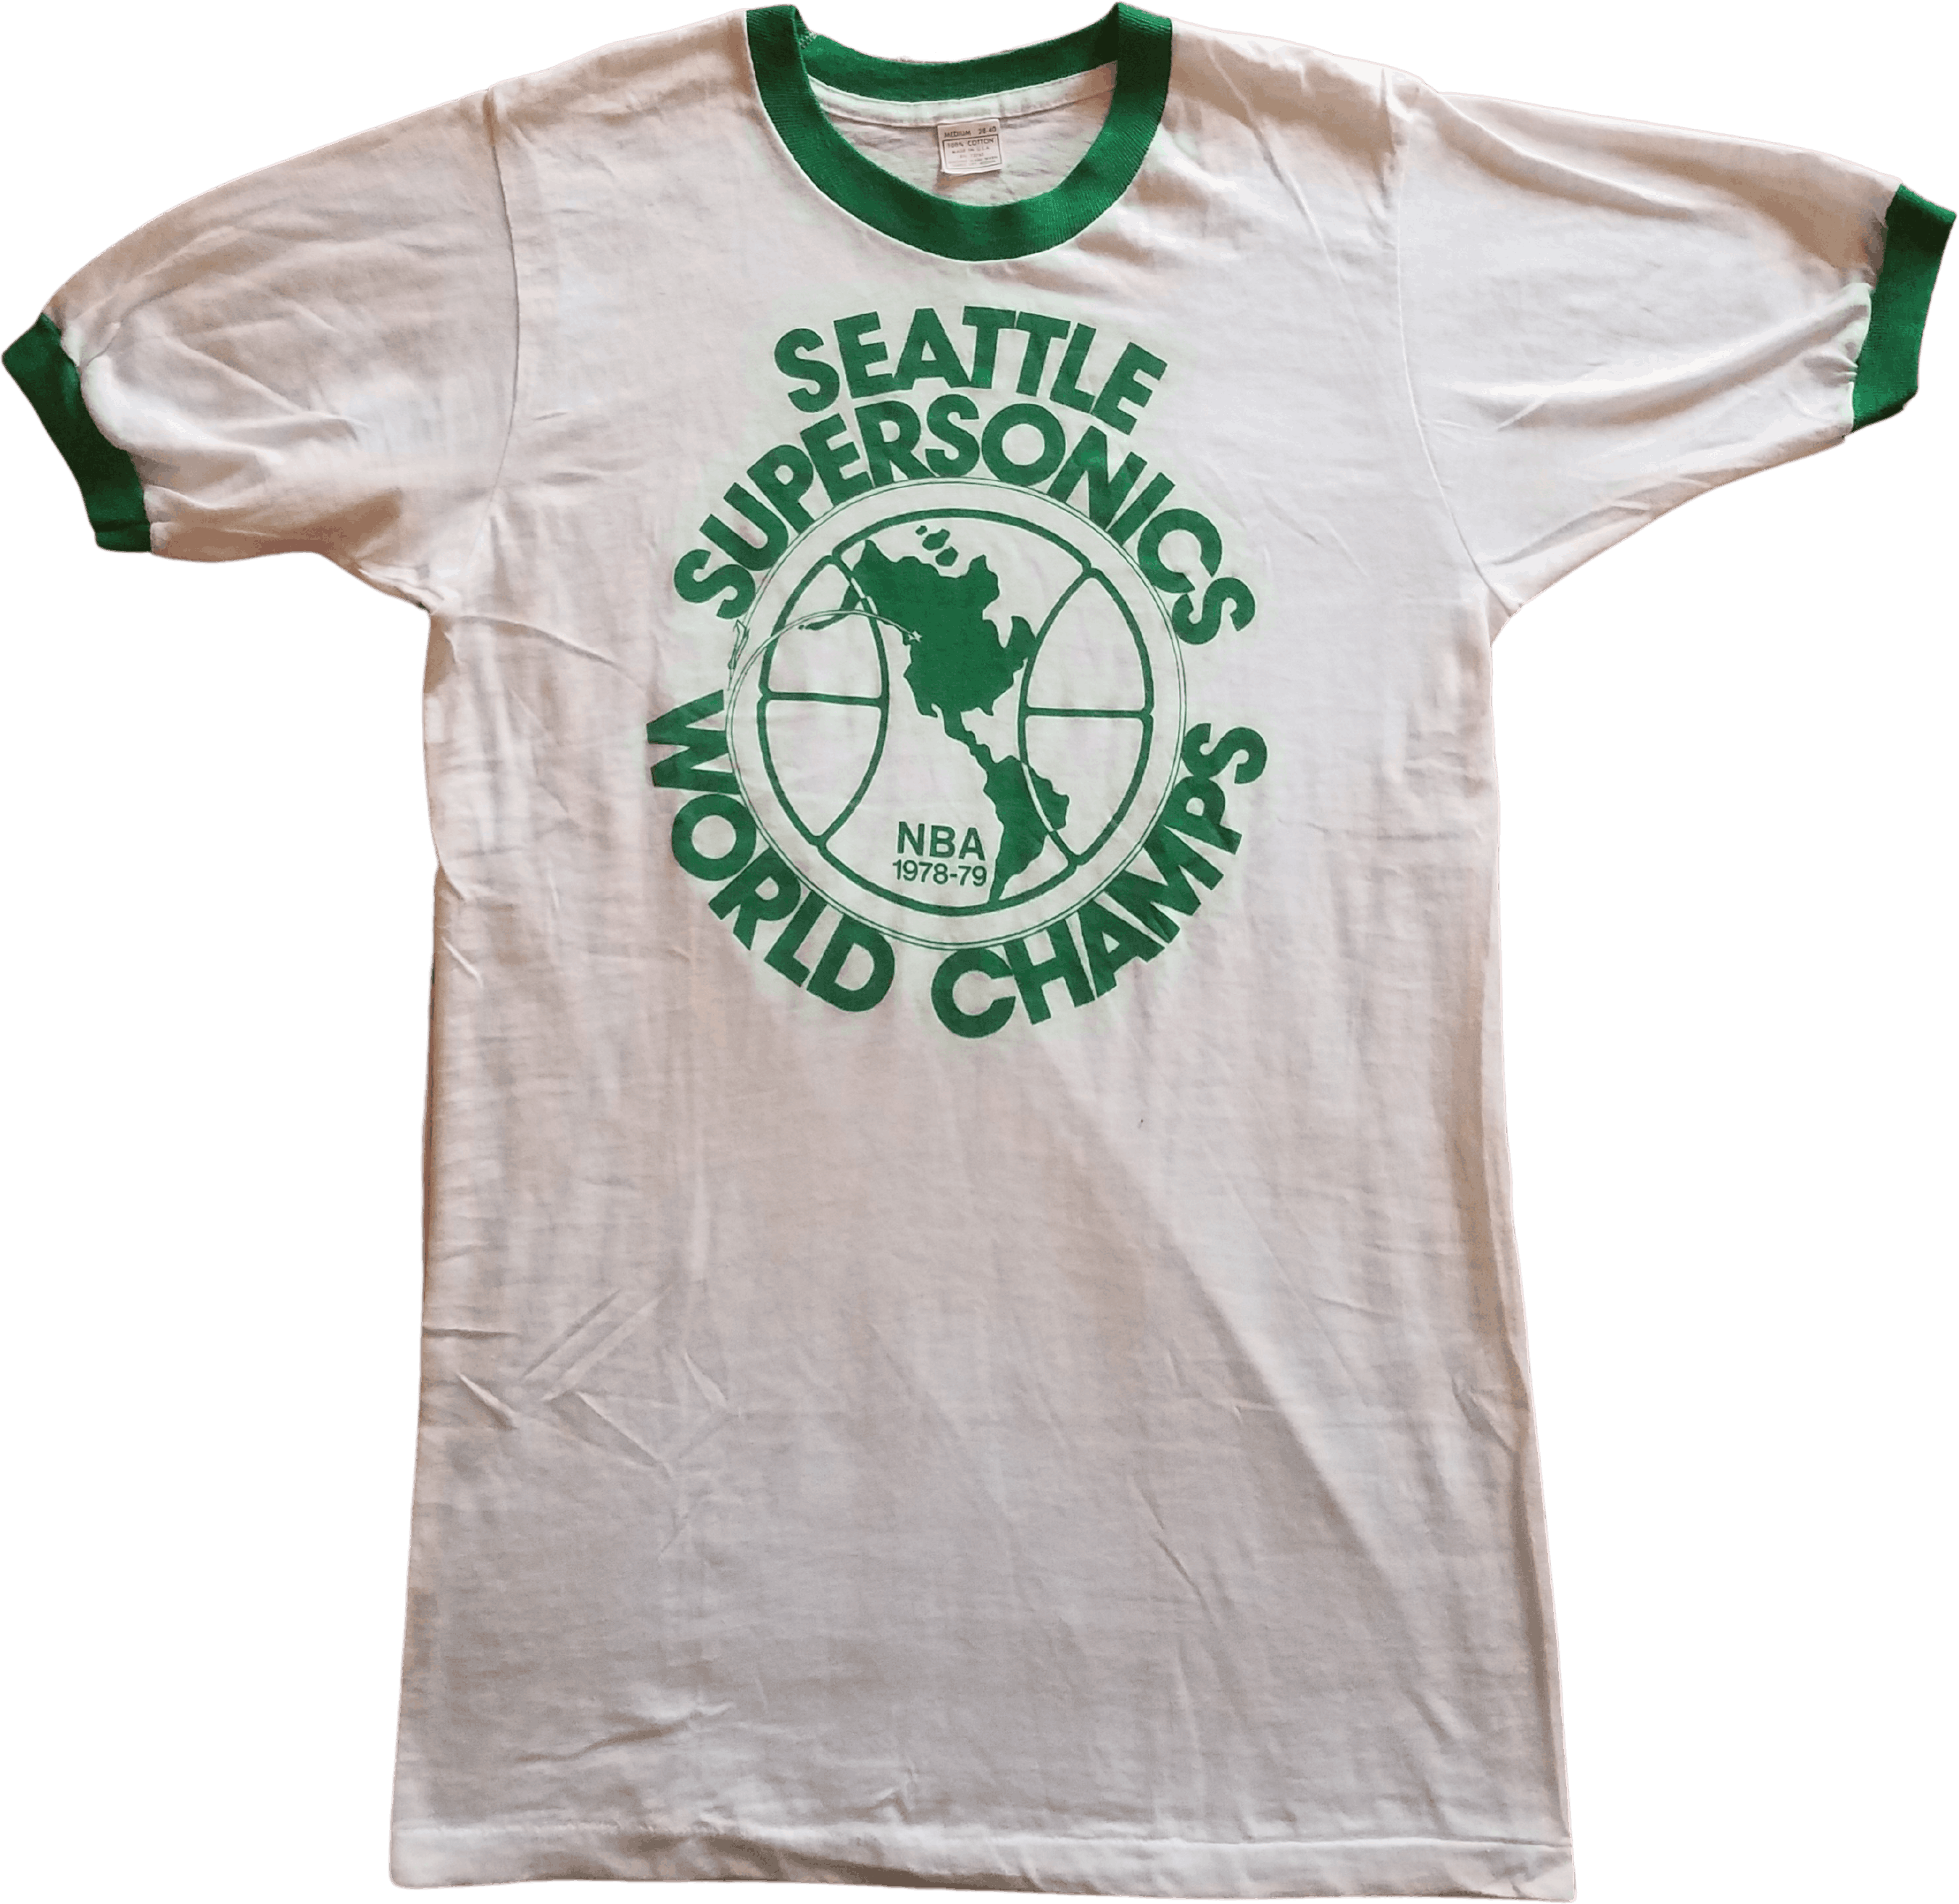 Vintage Seattle Supersonics 1979 World Champs T Shirt / Medium 